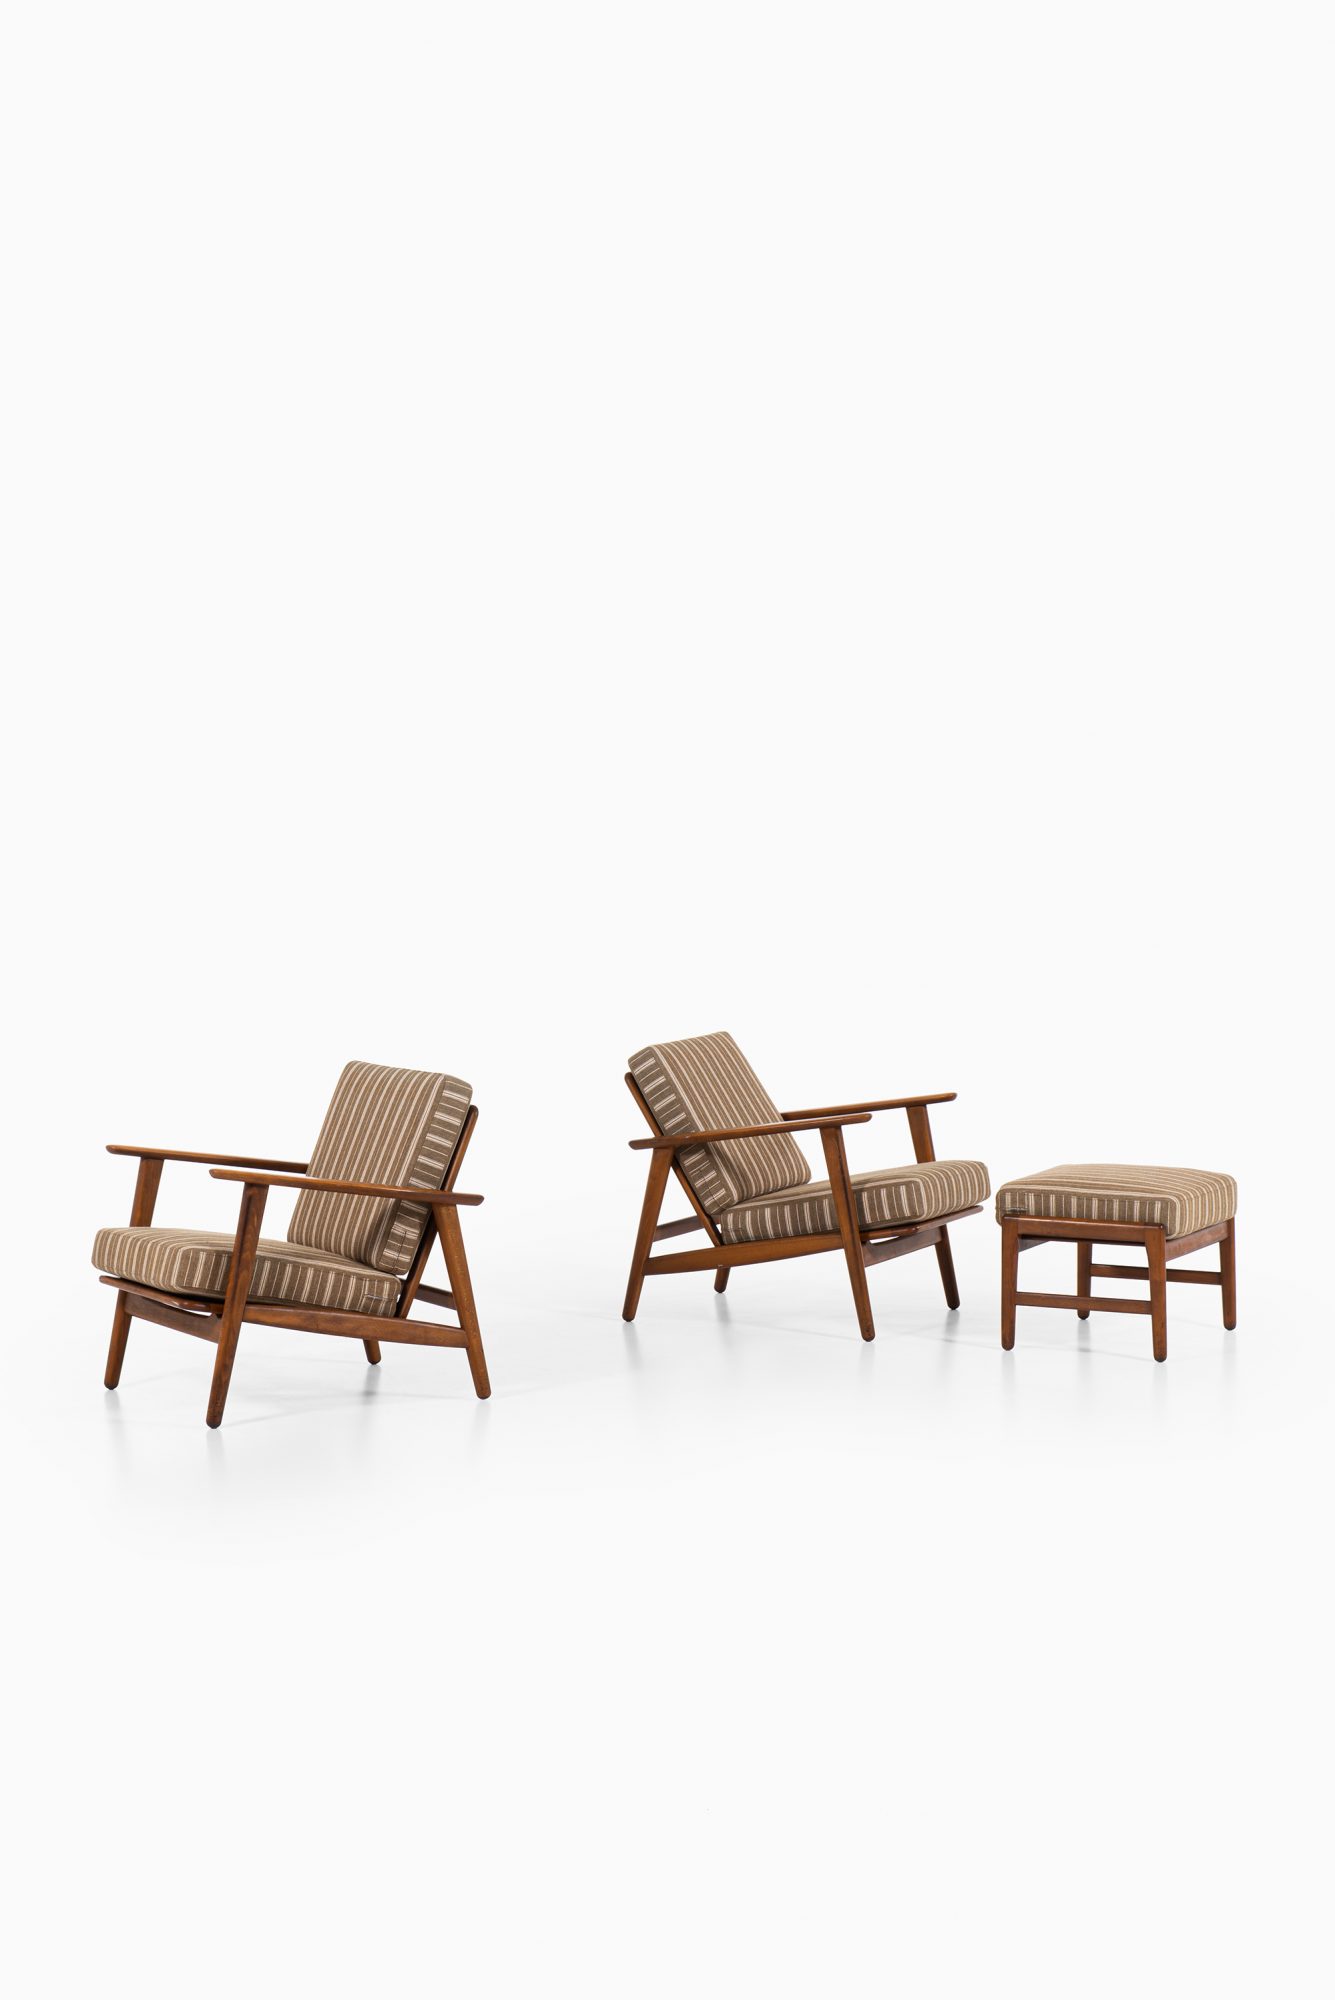 Hans Wegner GE-233 easy chairs by Getama at Studio Schalling